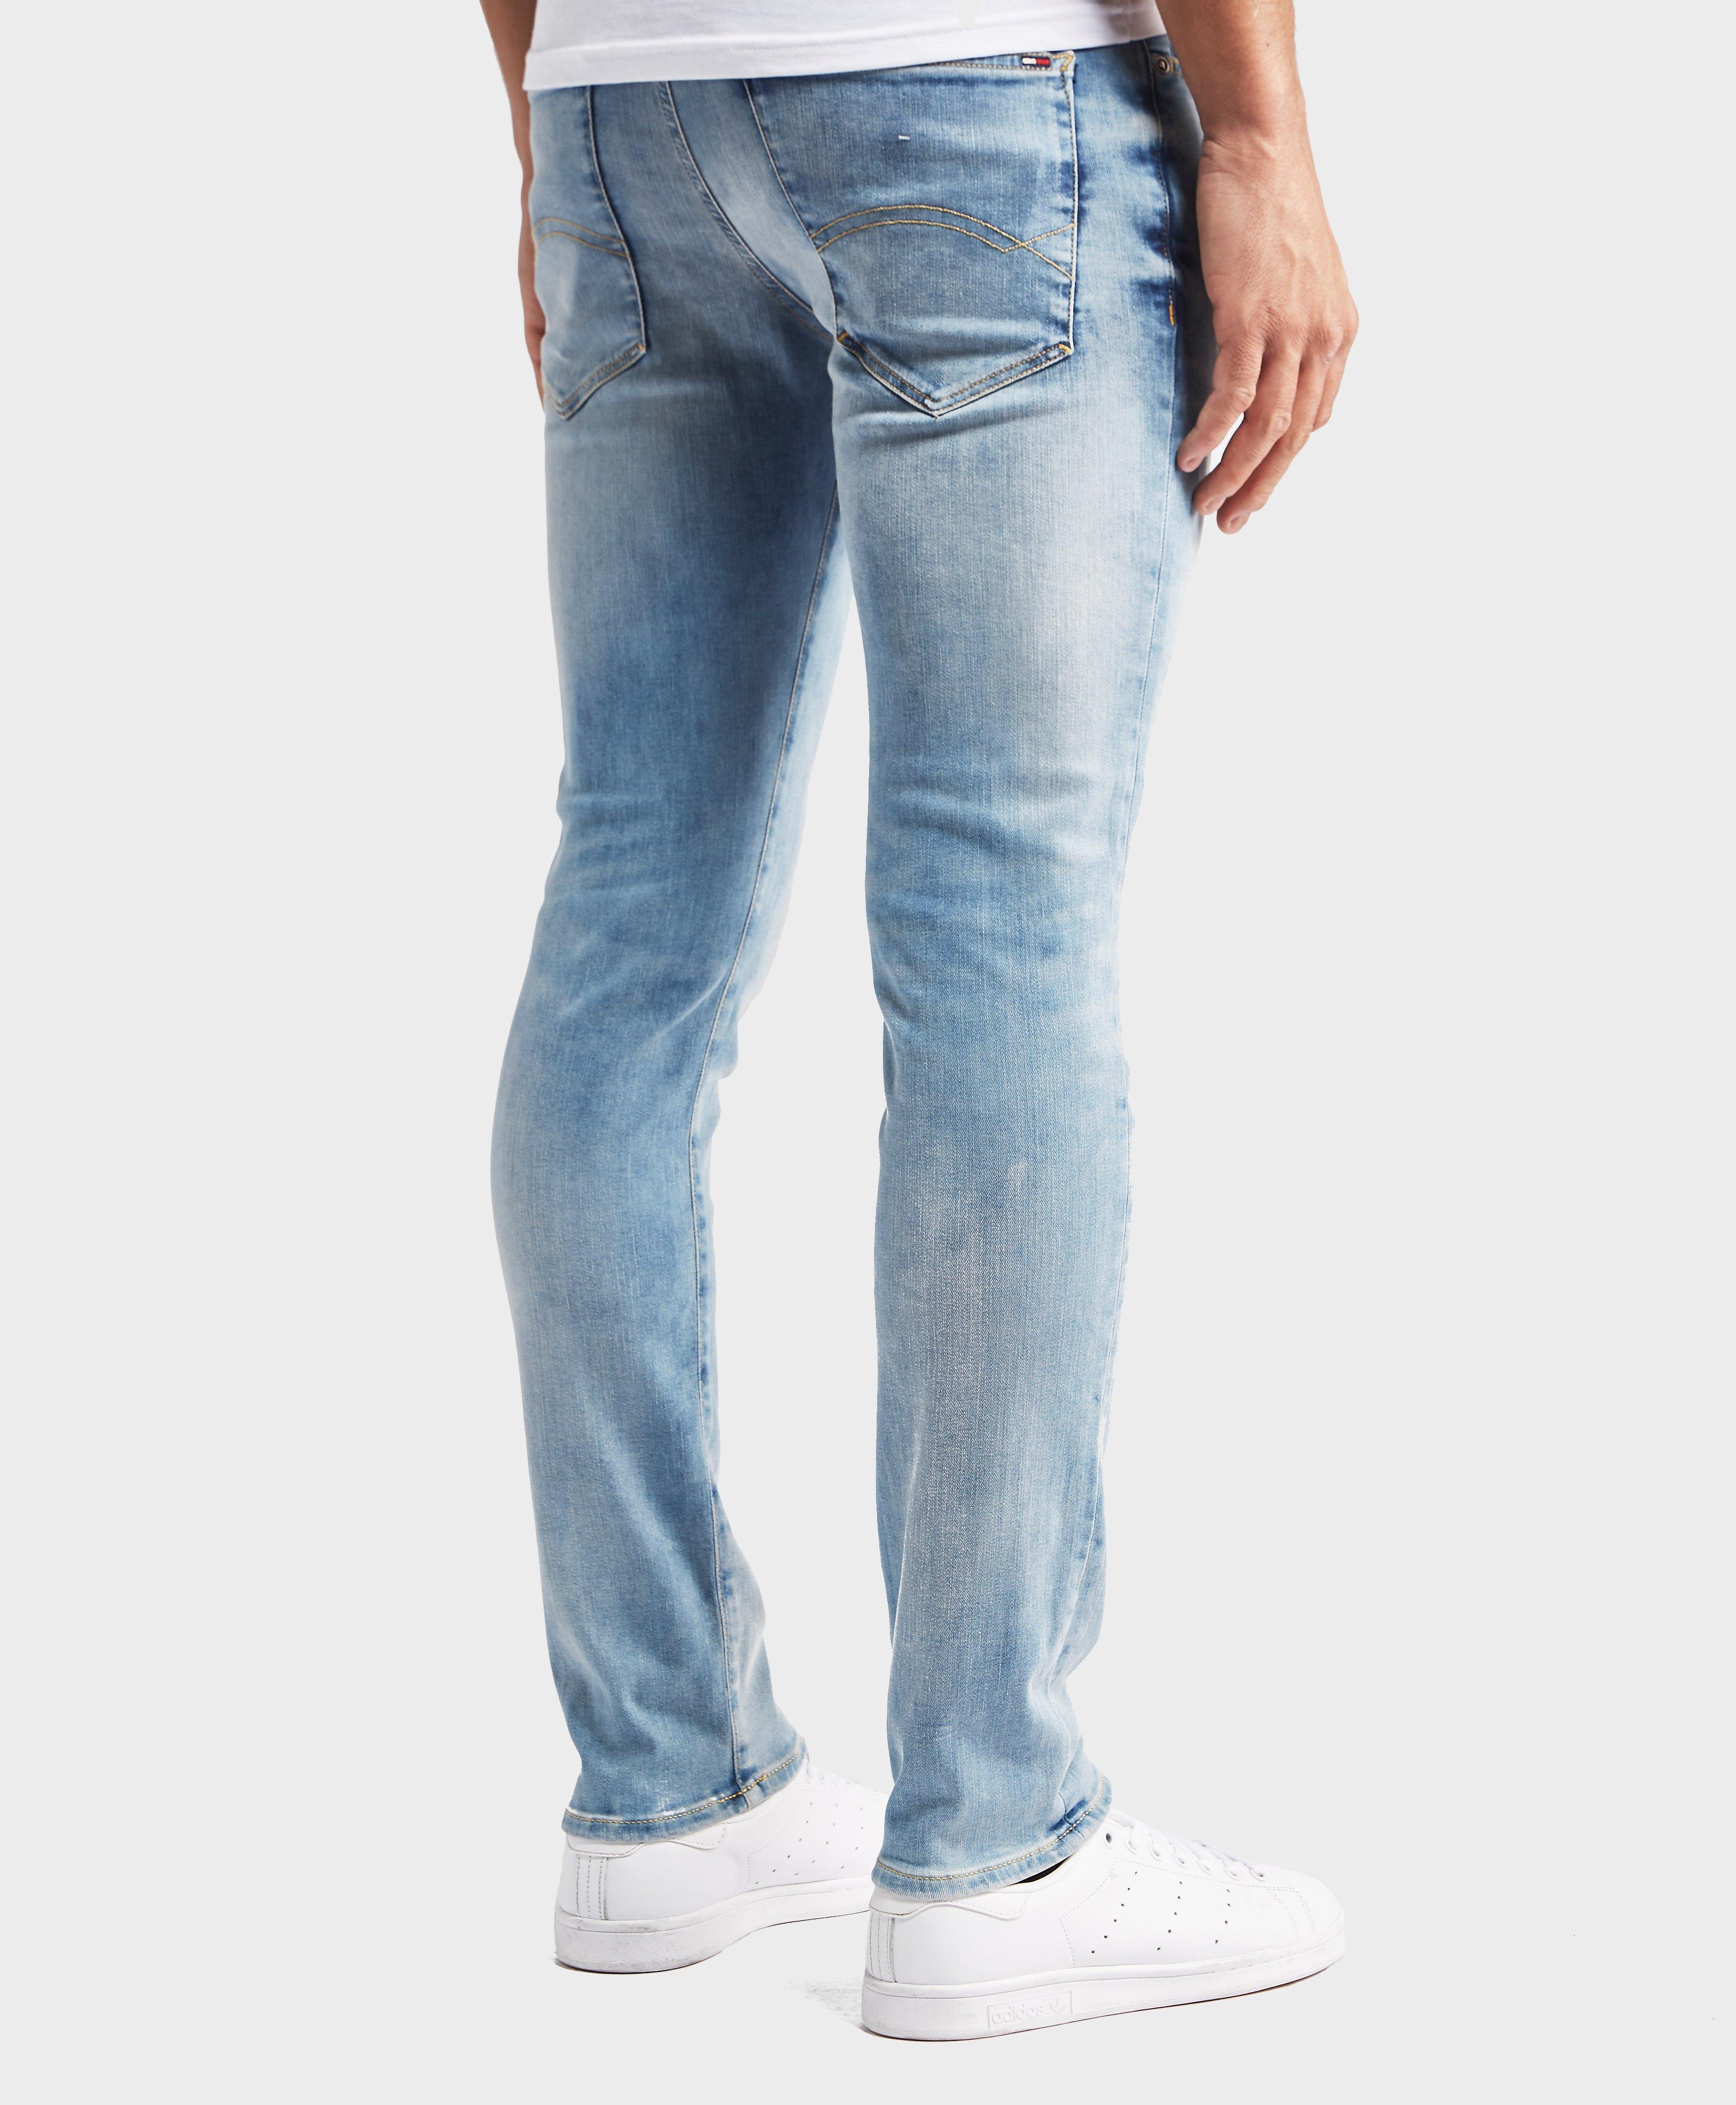 tommy hilfiger jeans simon skinny